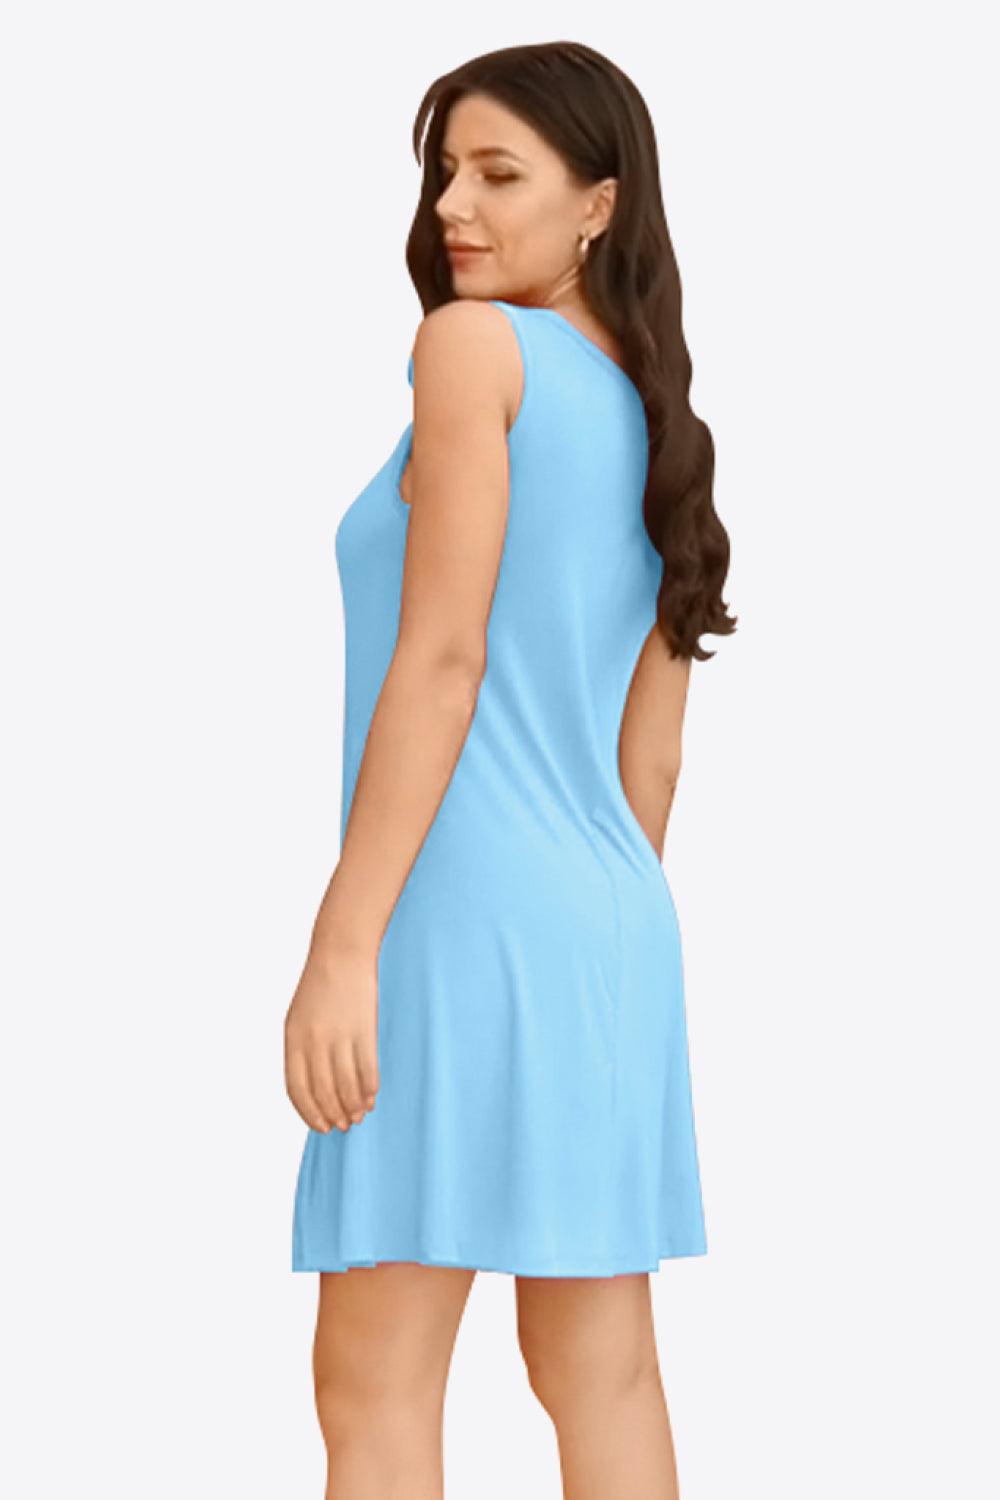 Full Size Round Neck Sleeveless Dress with Pockets - BELLATRENDZ